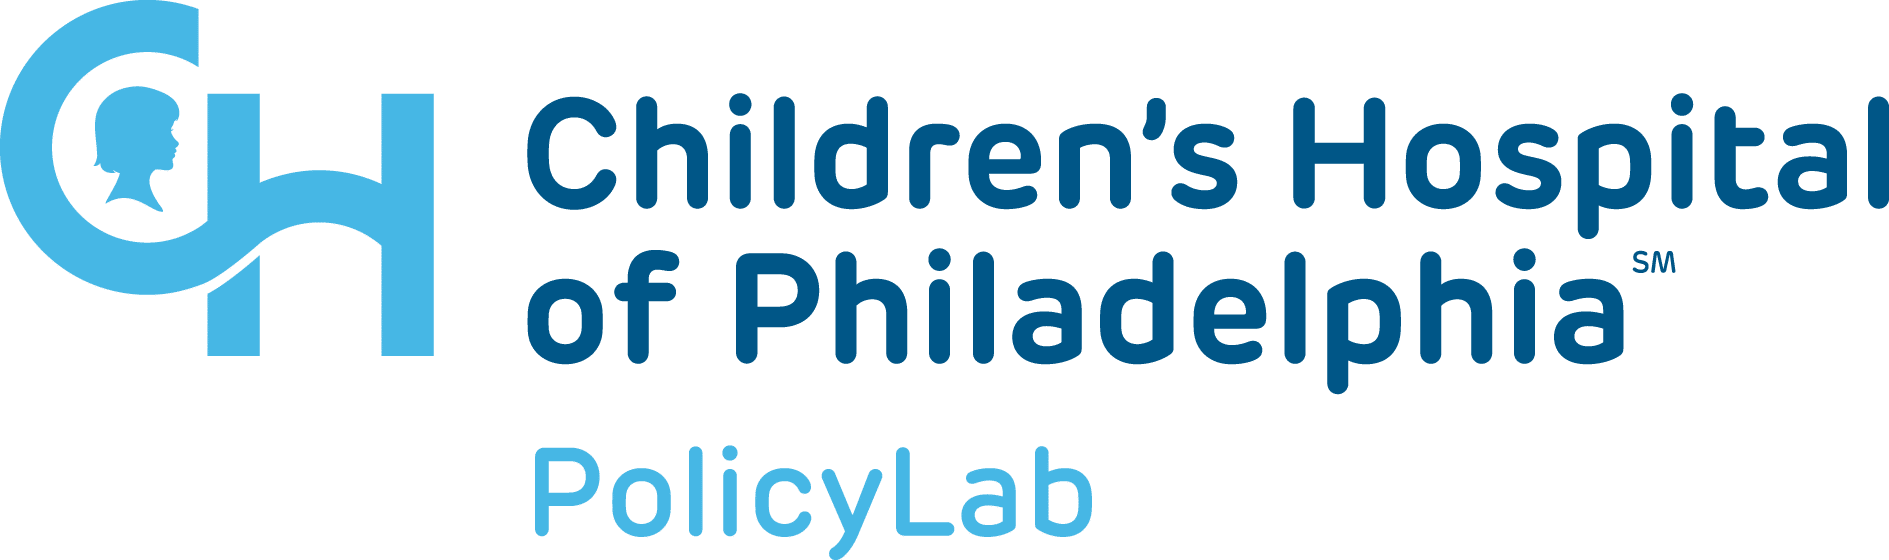 Children's Hospital of Philadelphia PolicyLab webpage.